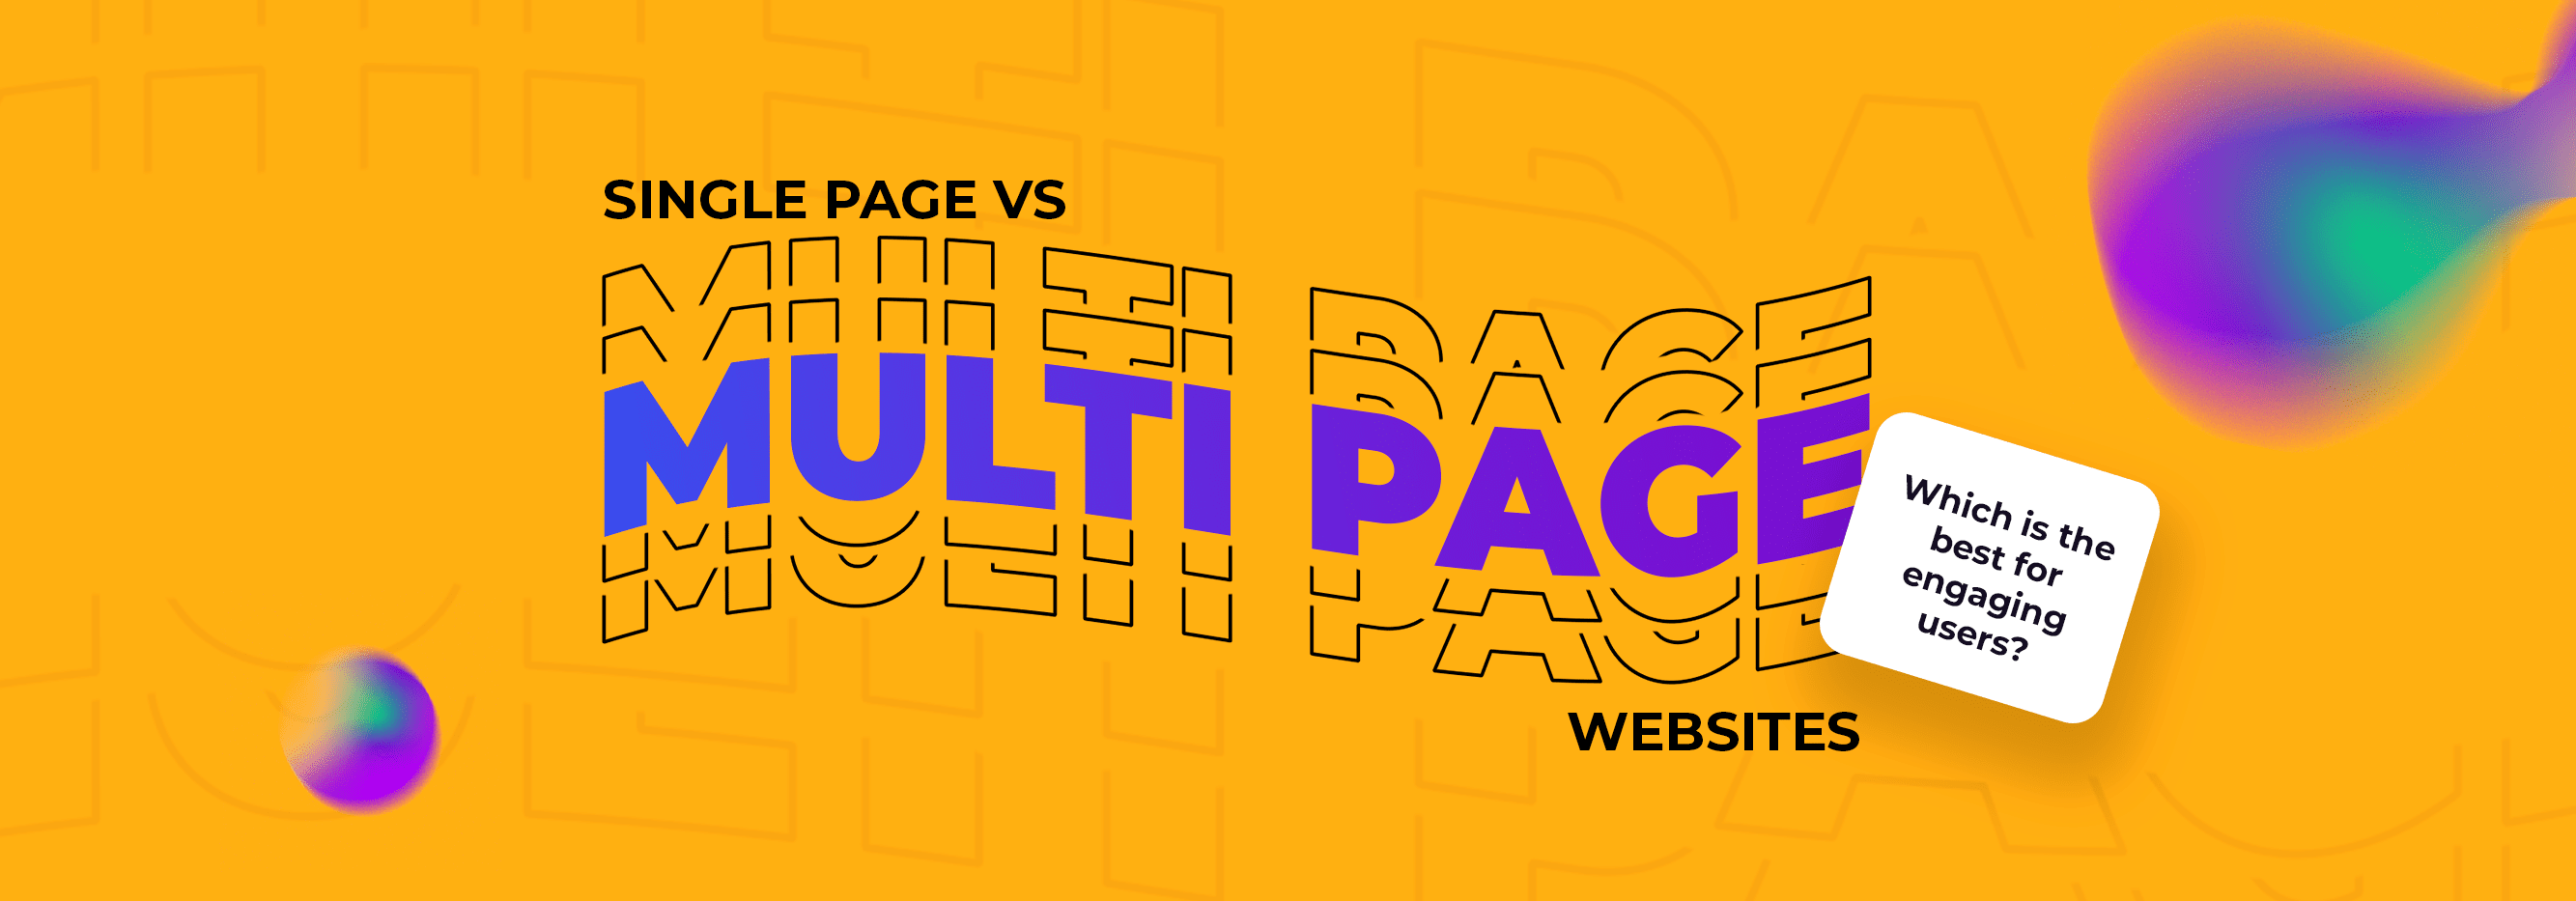 Single Page VS Multi Page